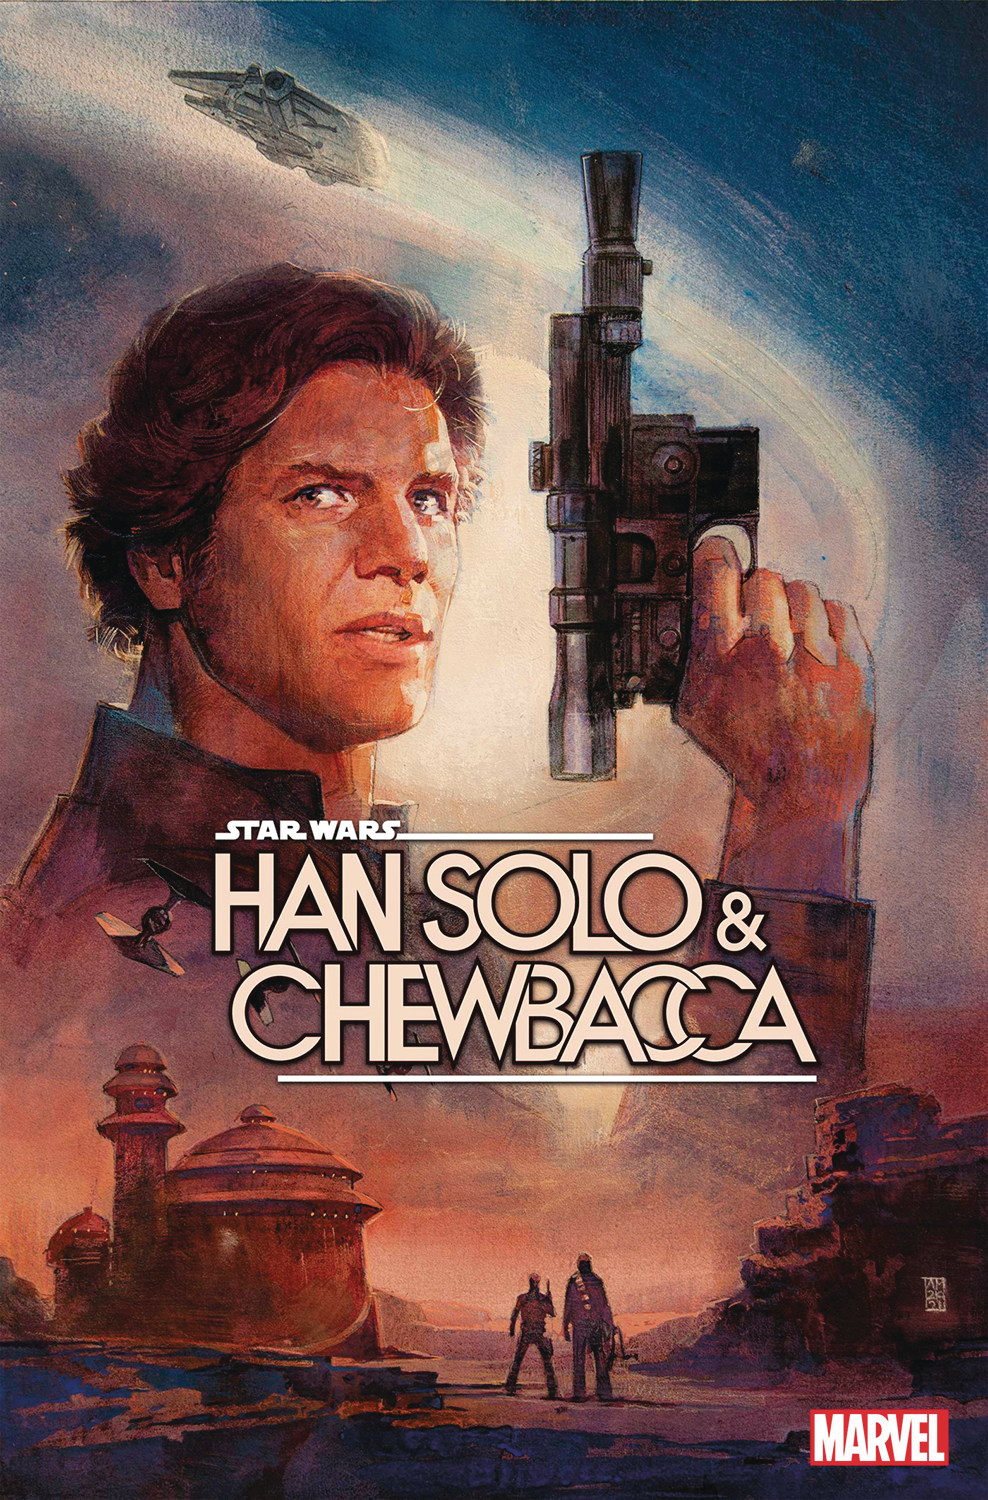 Star Wars Han Solo & Chewbacca #1